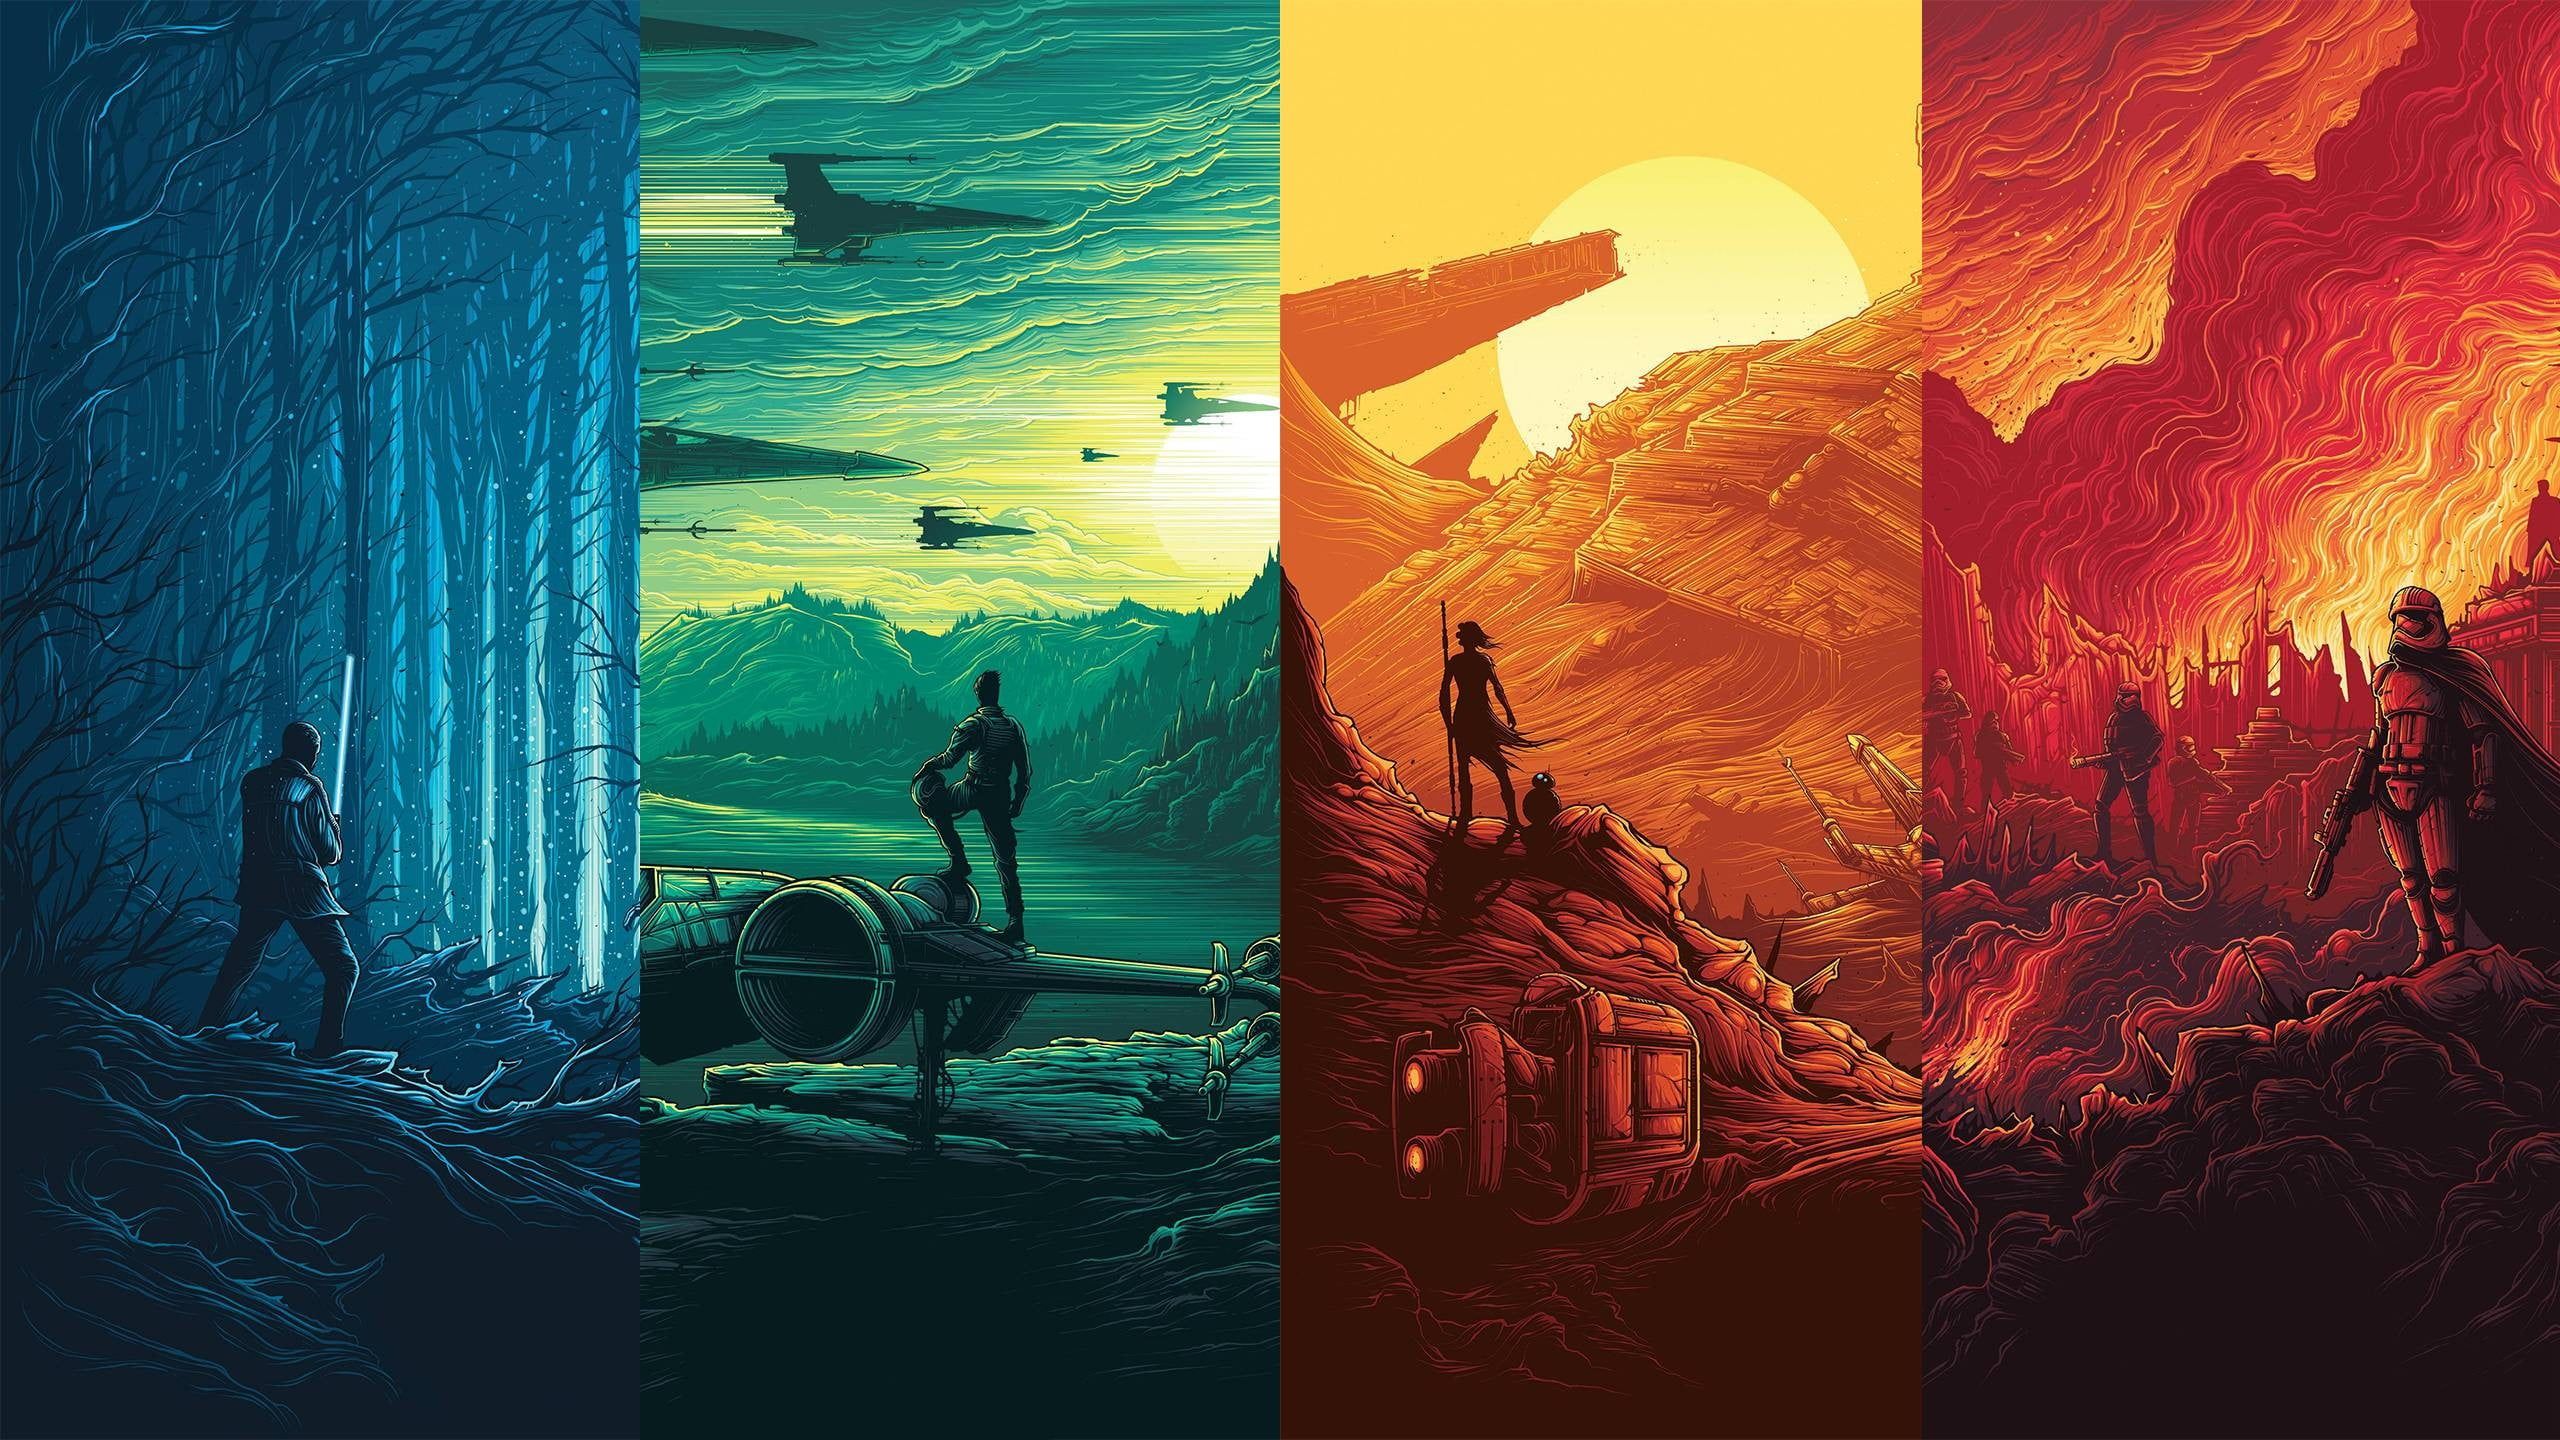 HD wallpaper: Star Wars wallpaper, Star Wars: The Force Awakens, collage, vector